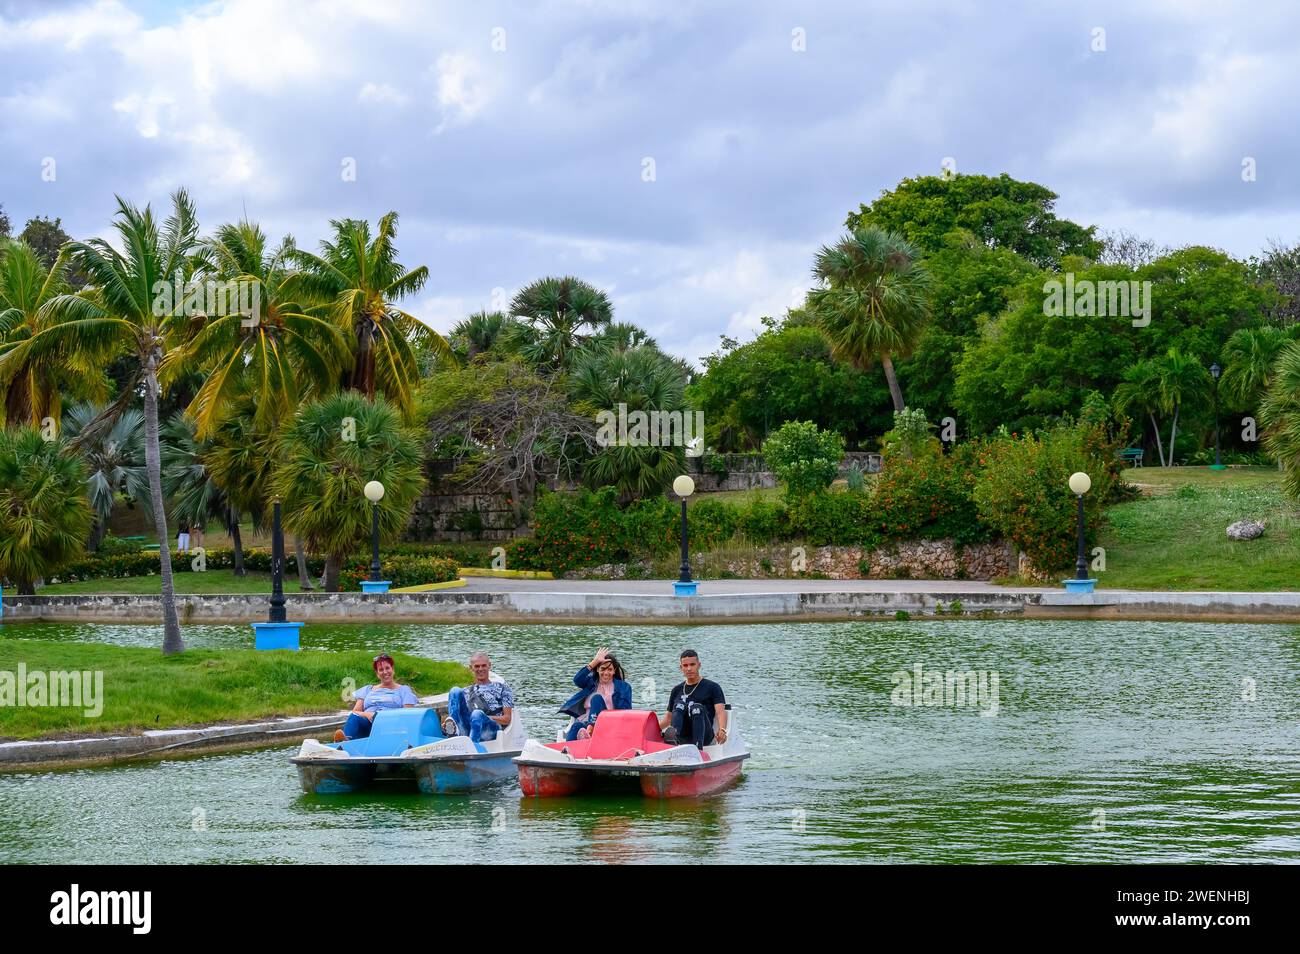 people in aquatic bicycle in parque josone, varadero, cuba Stock Photo